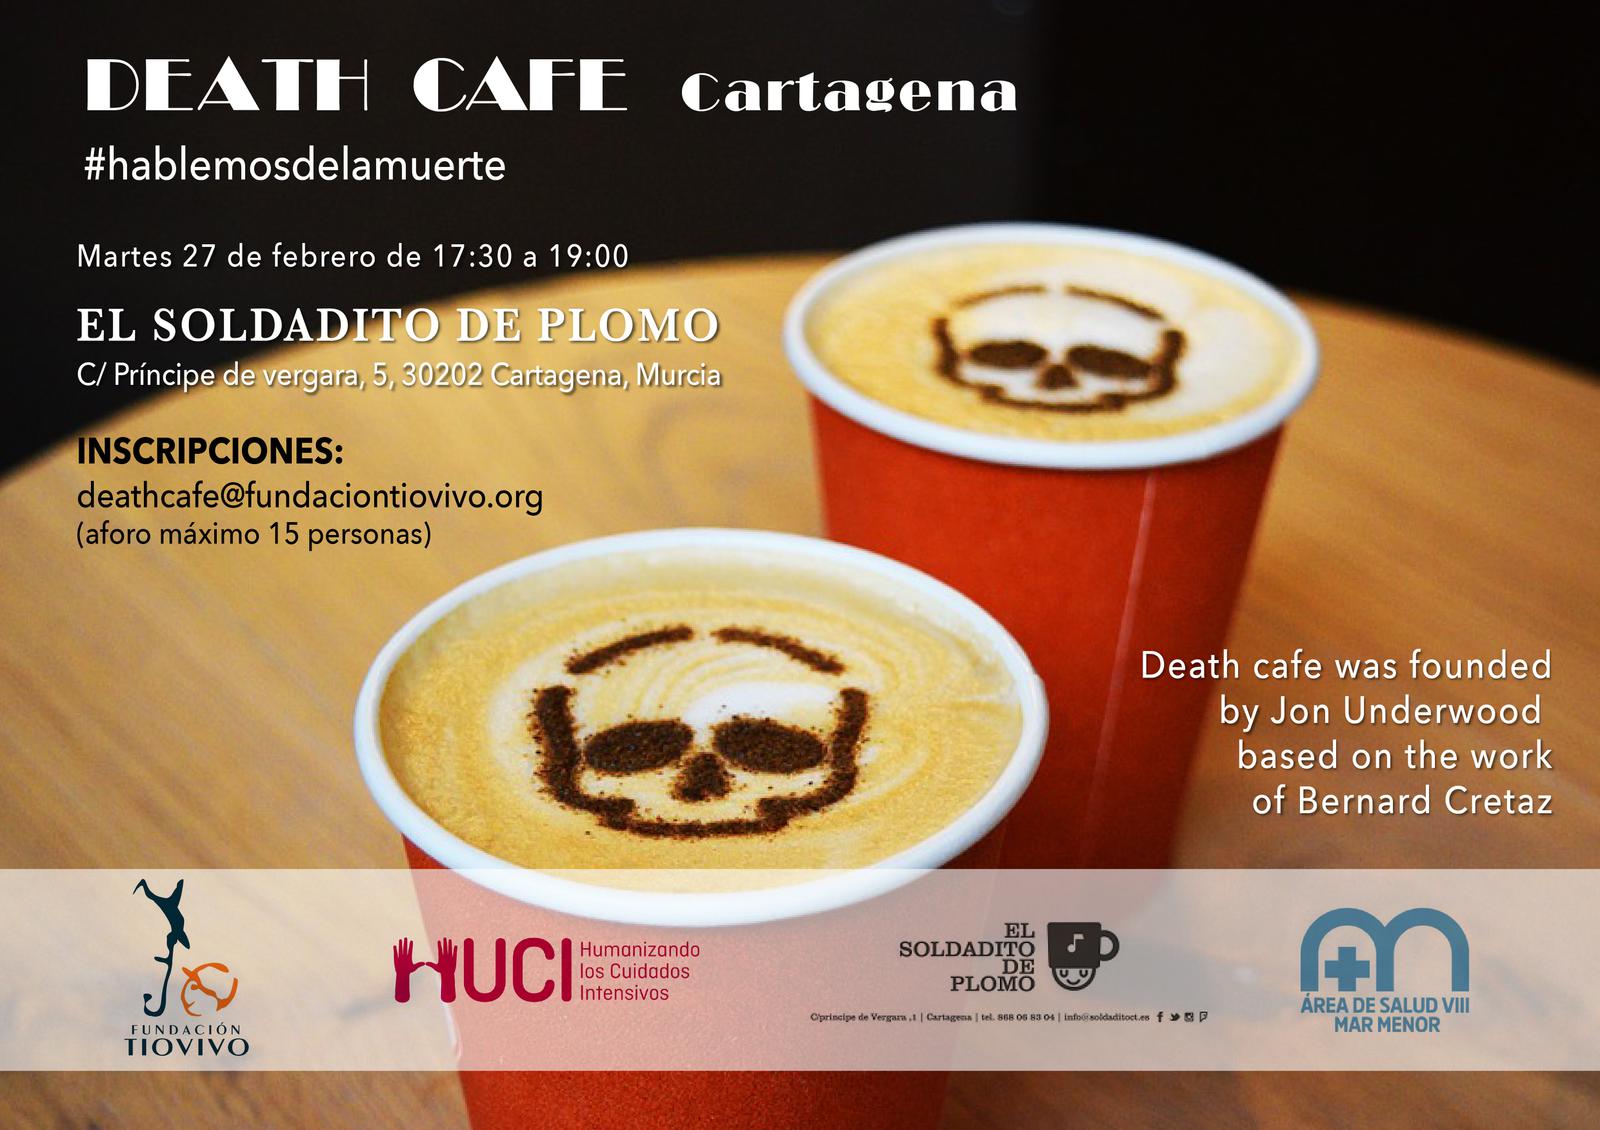 Death Cafe CARTAGENA (SPAIN)